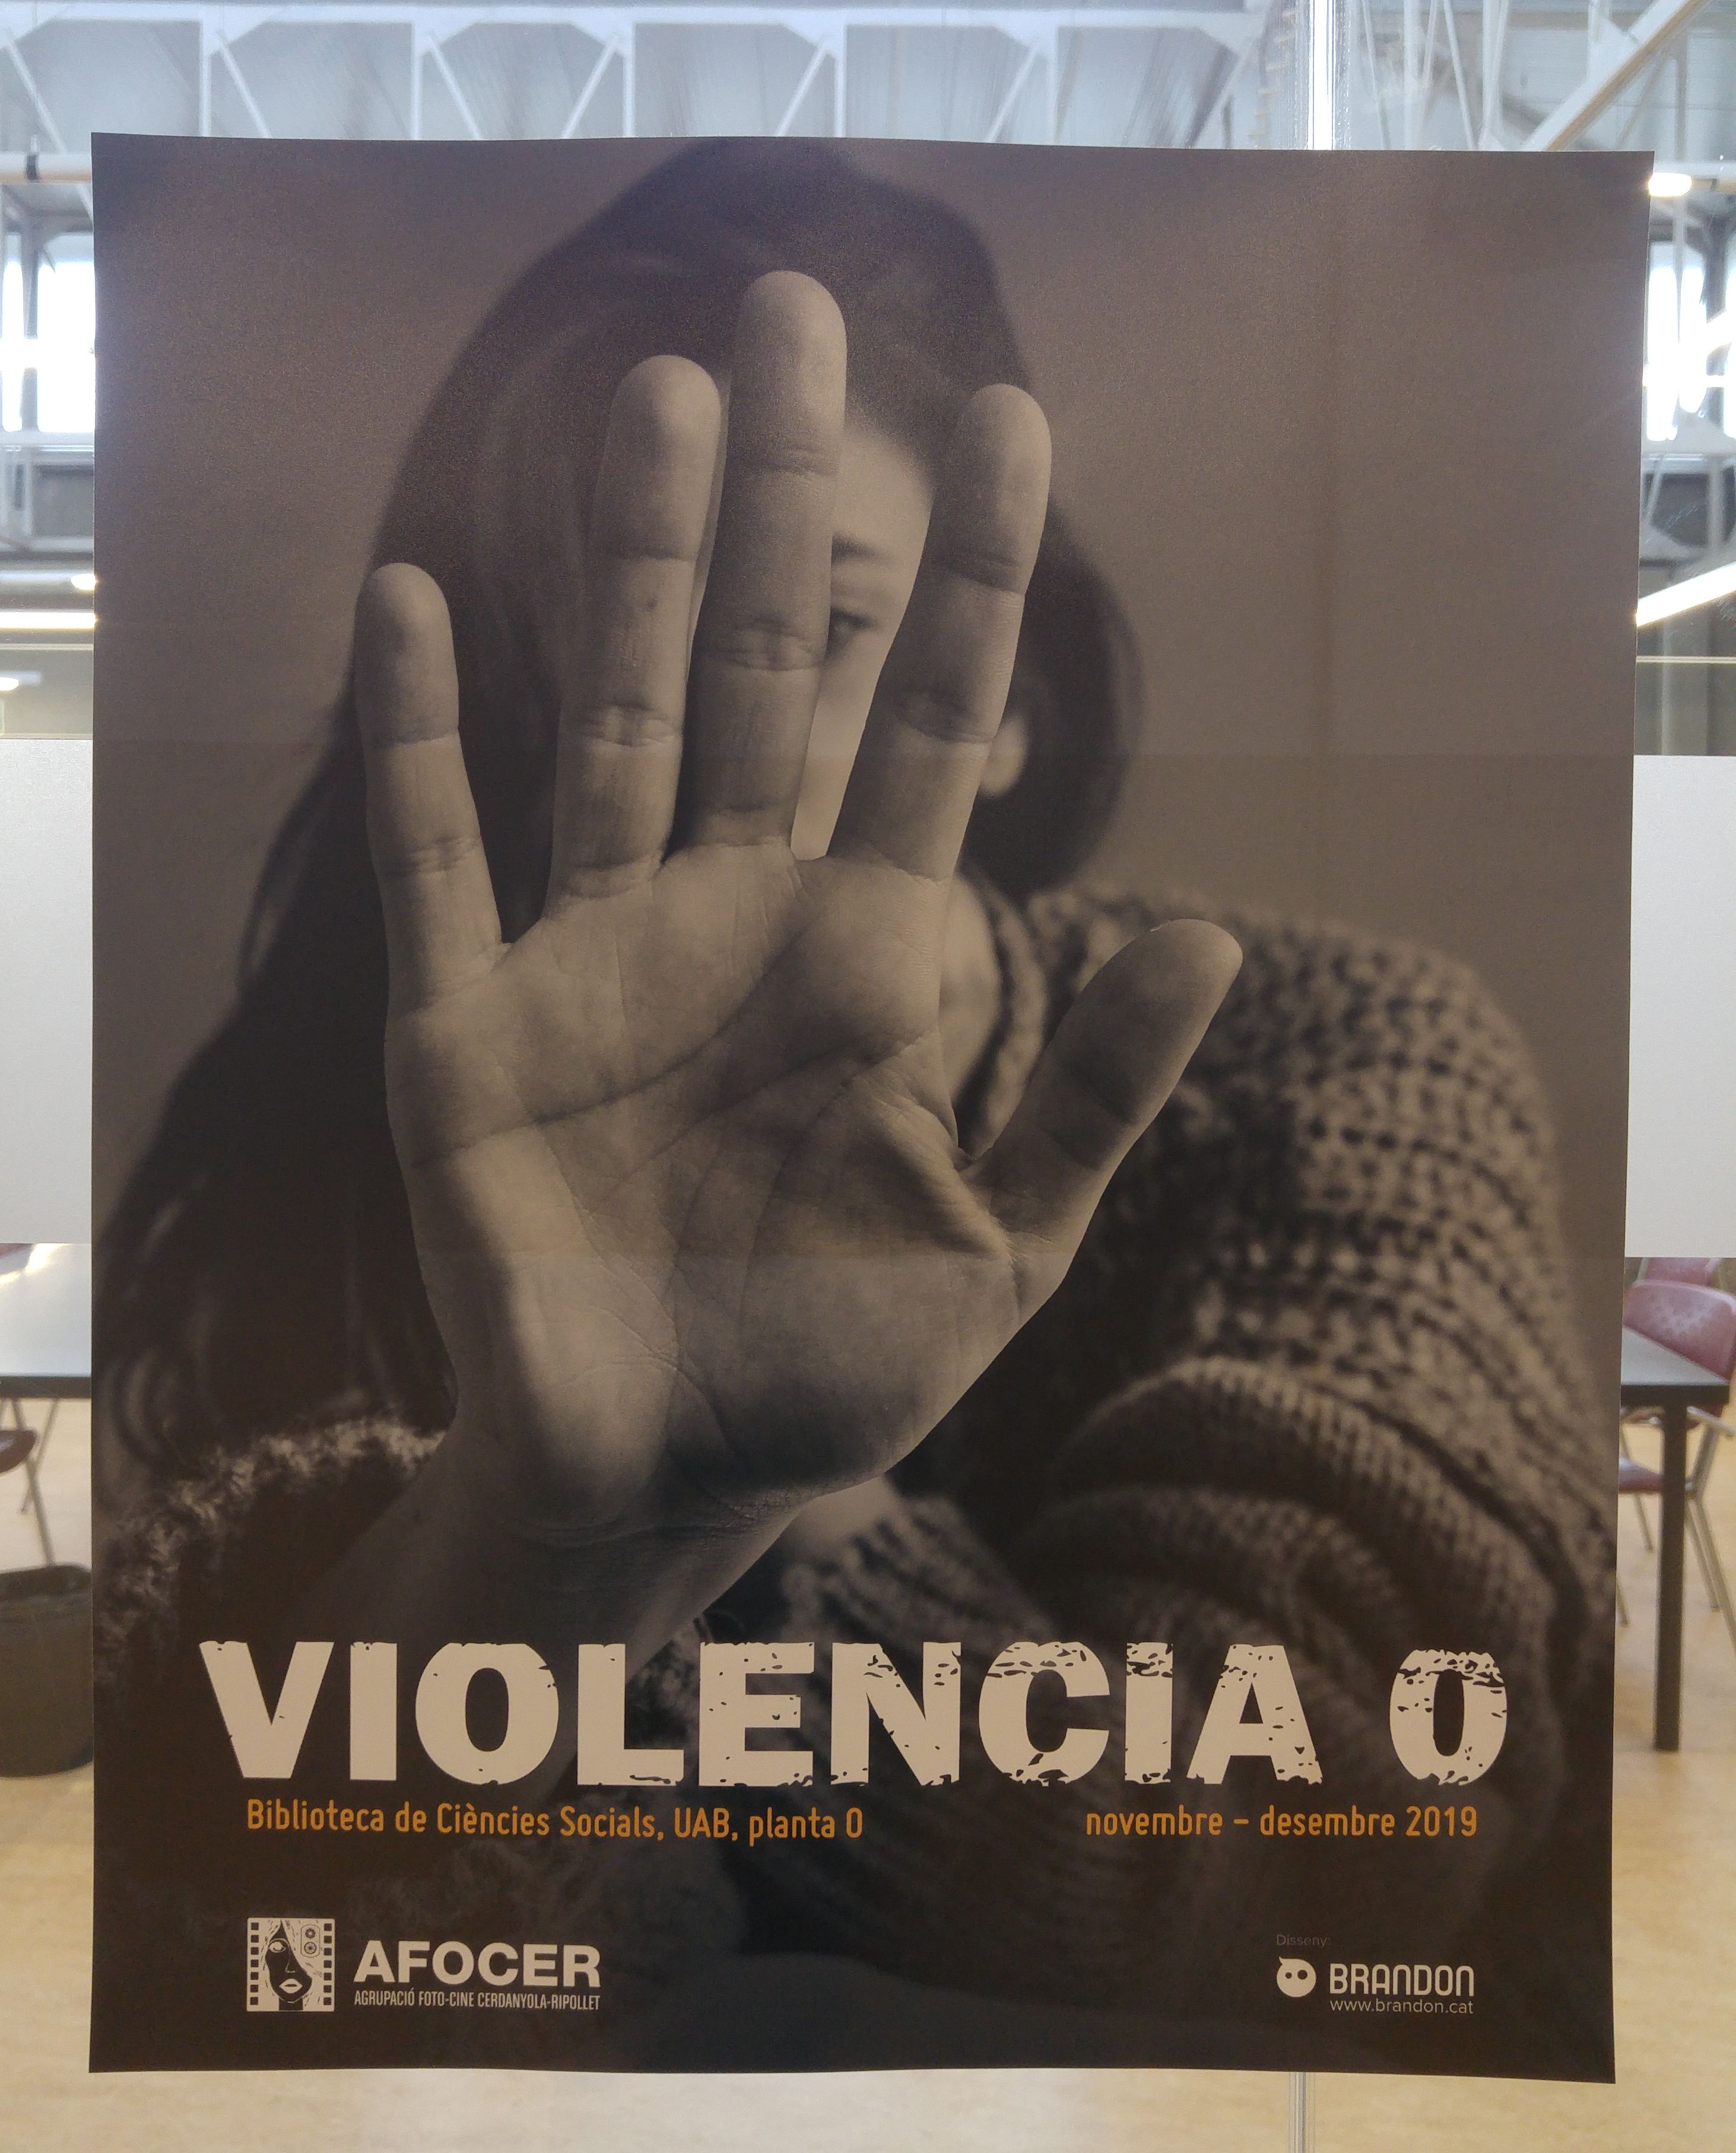 Image of the exhibition Violència 0